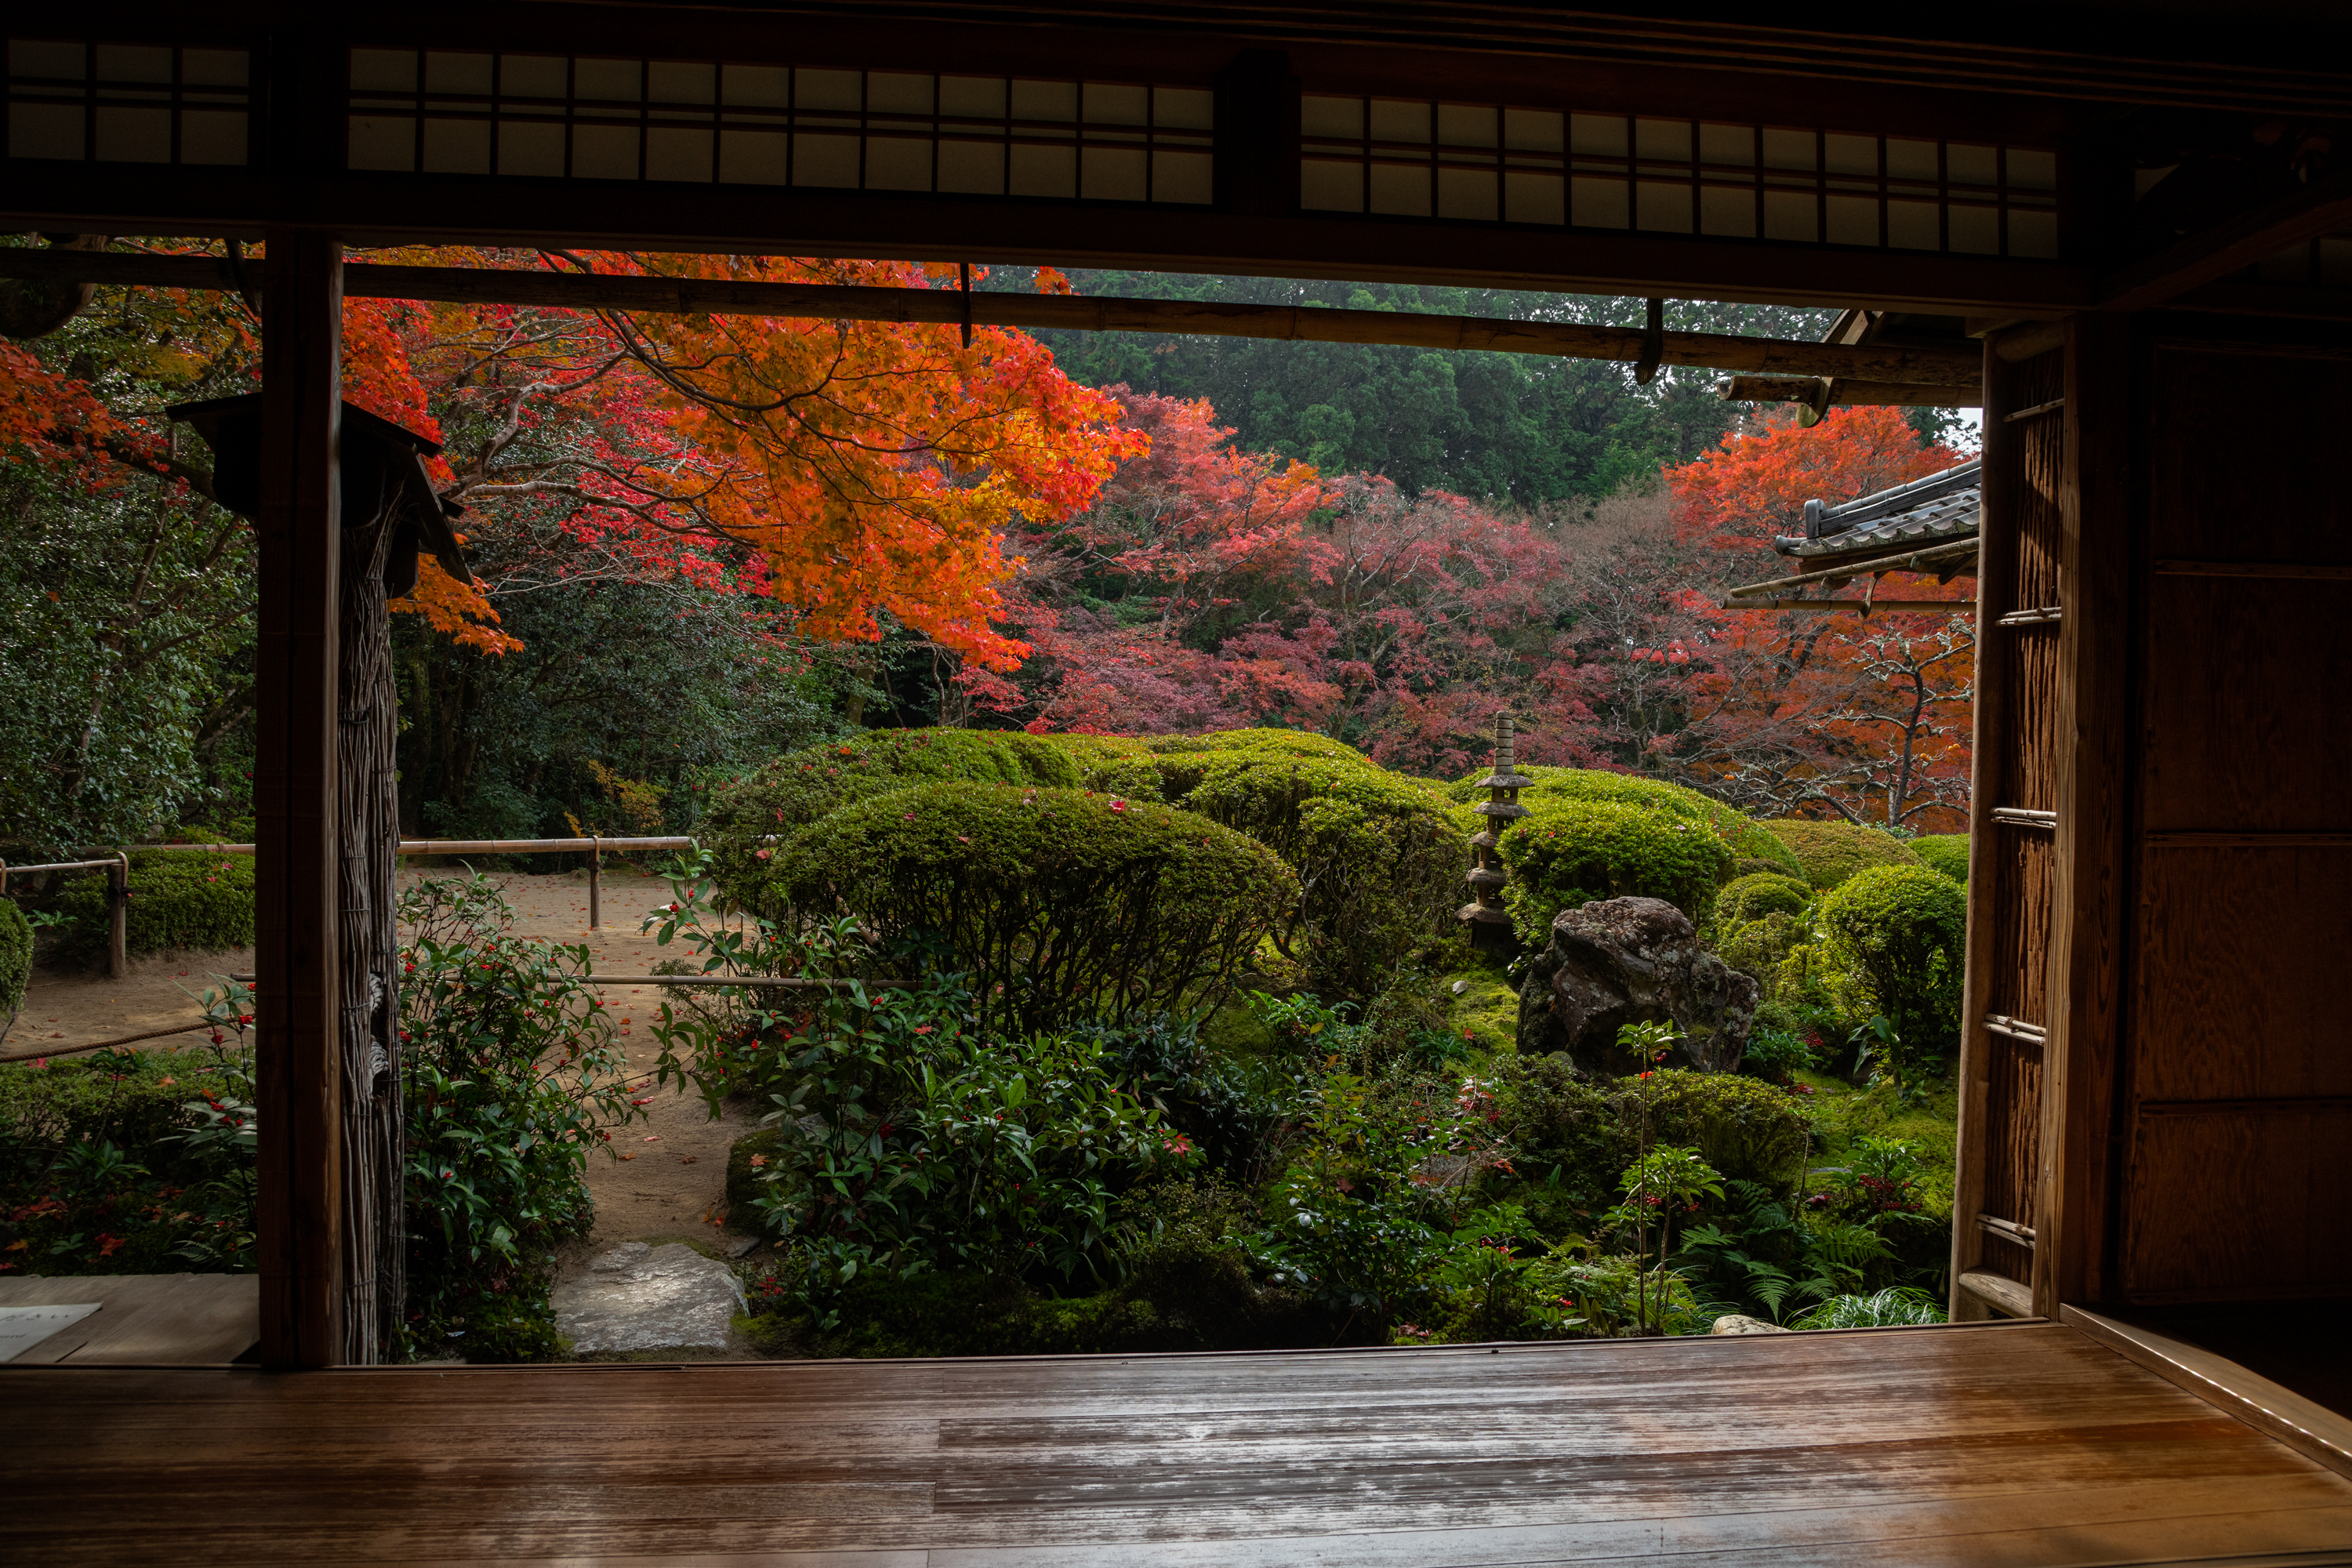 NIKON-CORPORATION_NIKON-D850_3345440050-3345545930_22592 京都  詩仙堂( 紅葉の庭園が美しい秋におすすめの写真スポット!撮影した写真の紹介、アクセス情報や交通手段など)